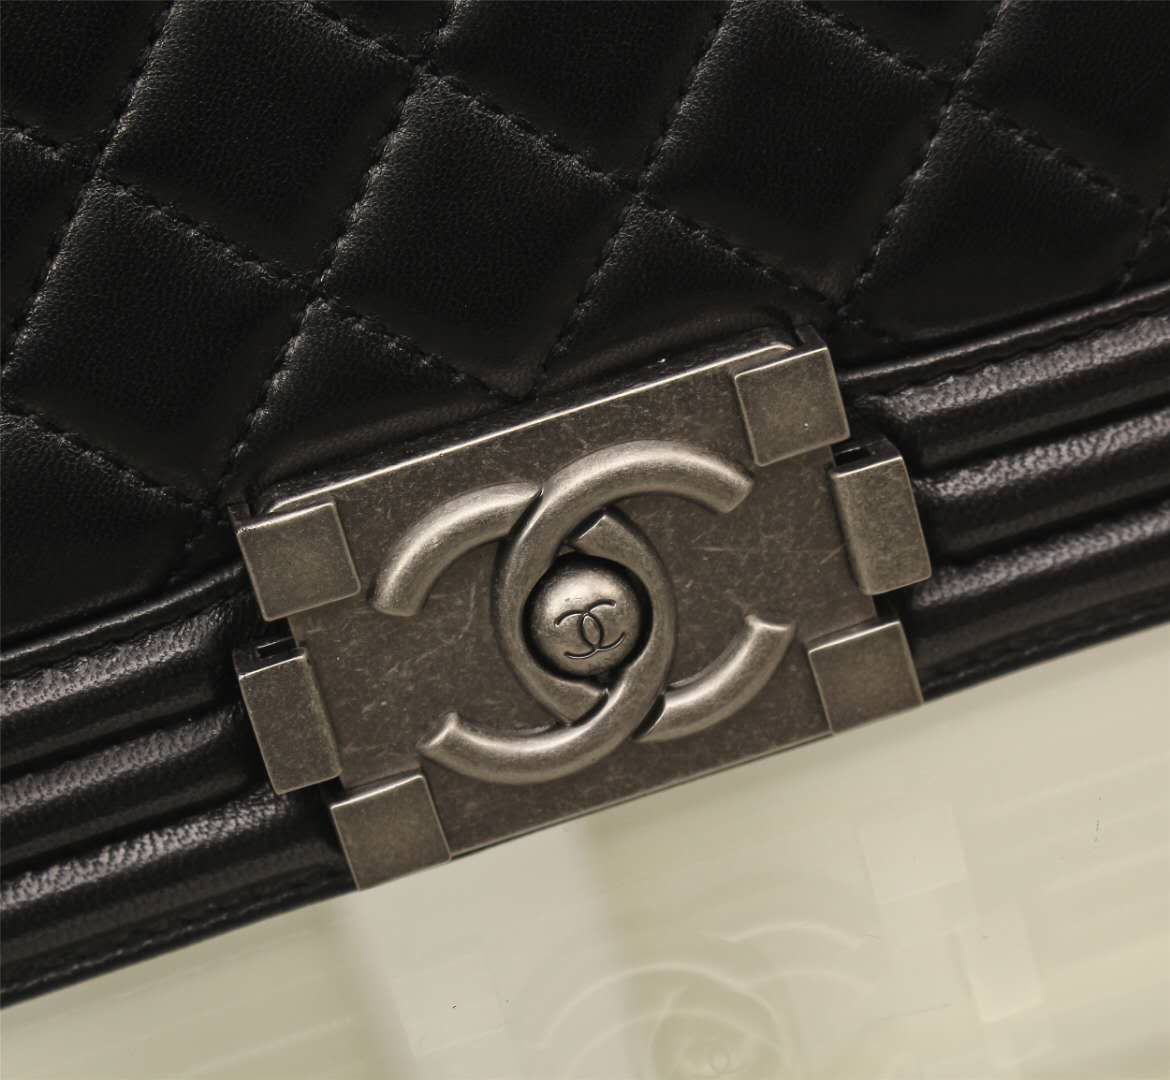 ORIGINAL QUALITY Chanel Boy Flap Shoulder Bag A30172 Black Sheepskin Leather